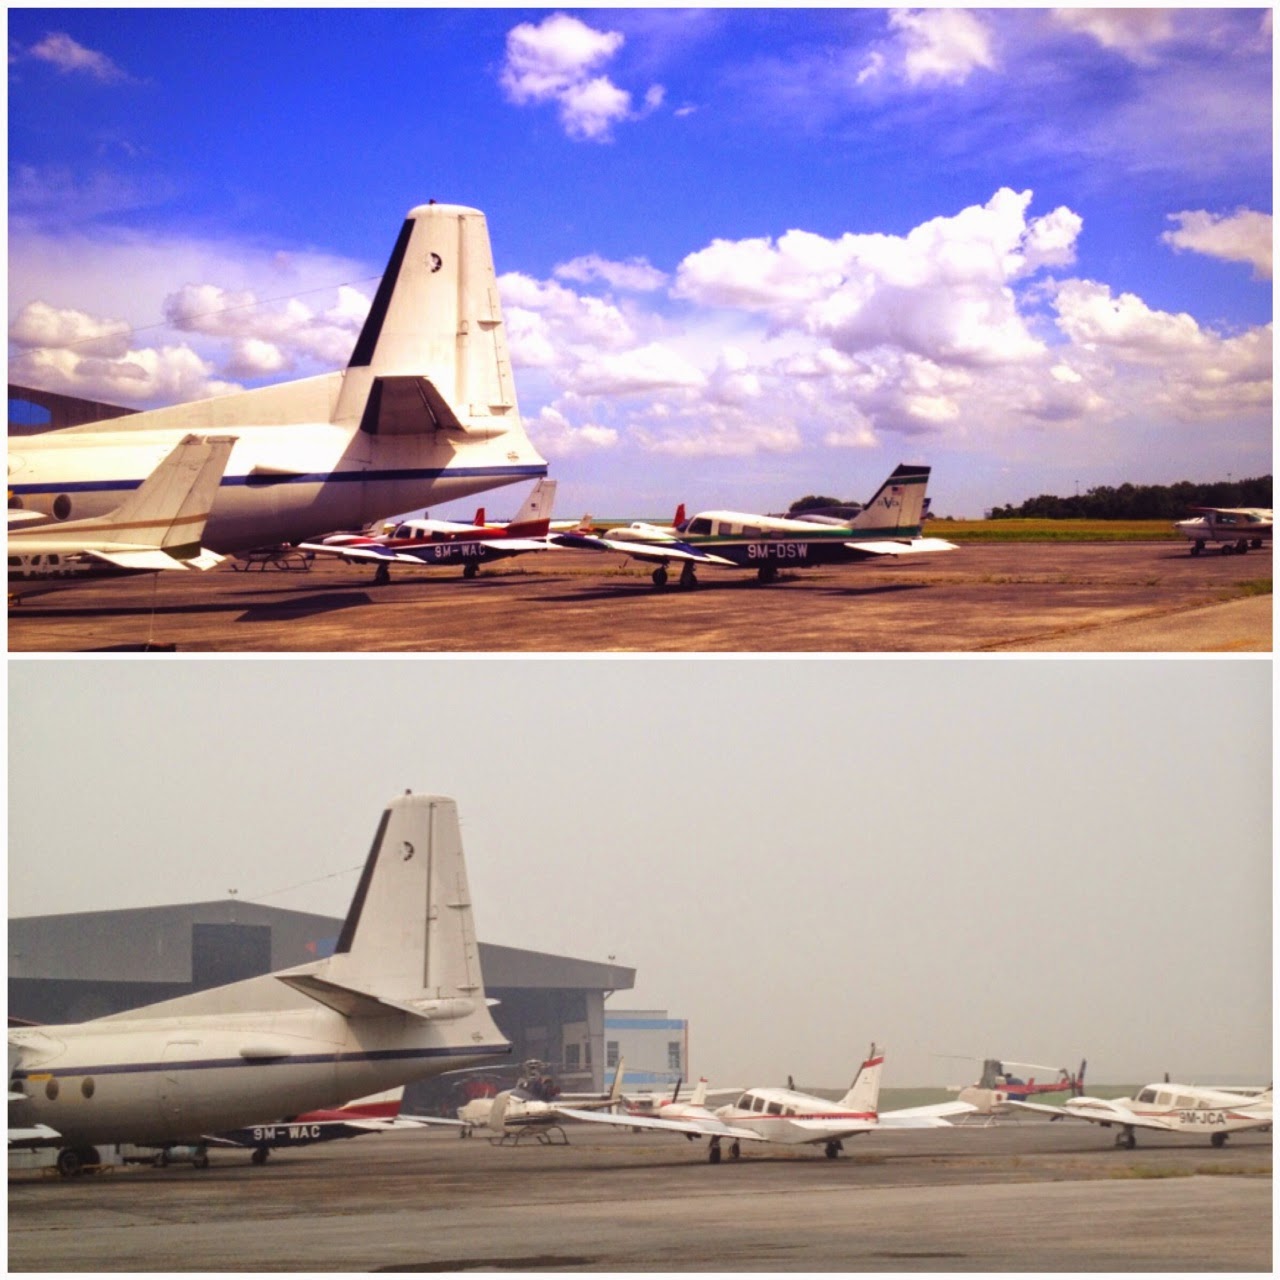 HAZE MALAYSIA SUBANG AIRPORT LOW VISIBILITY JUNE 2013